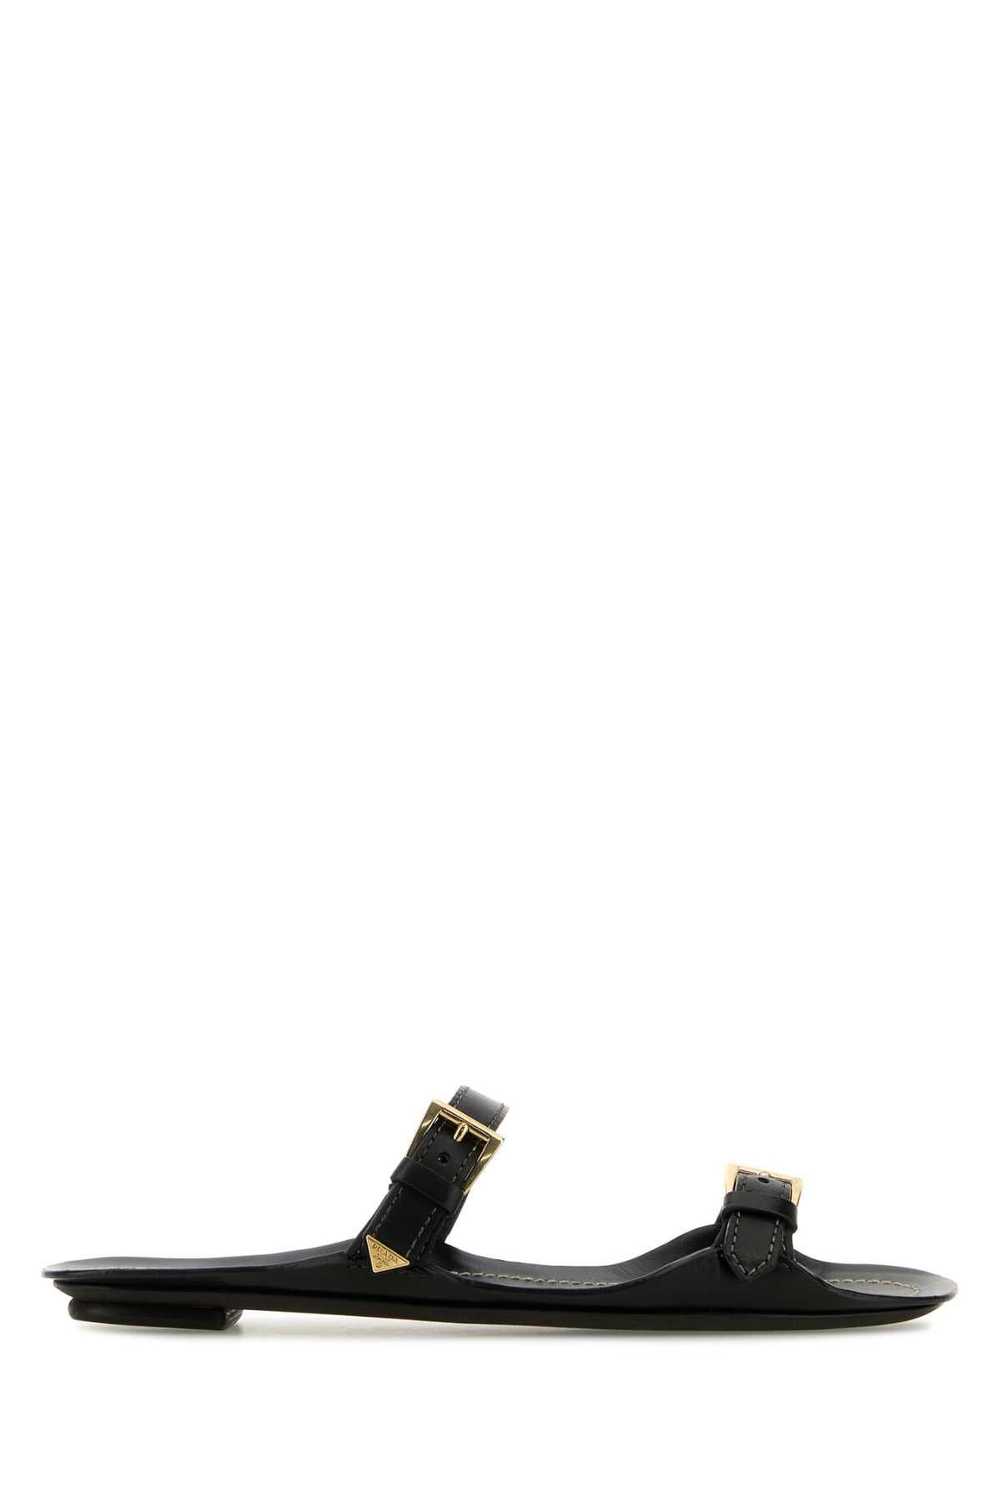 Prada Black Leather Slippers - image 1